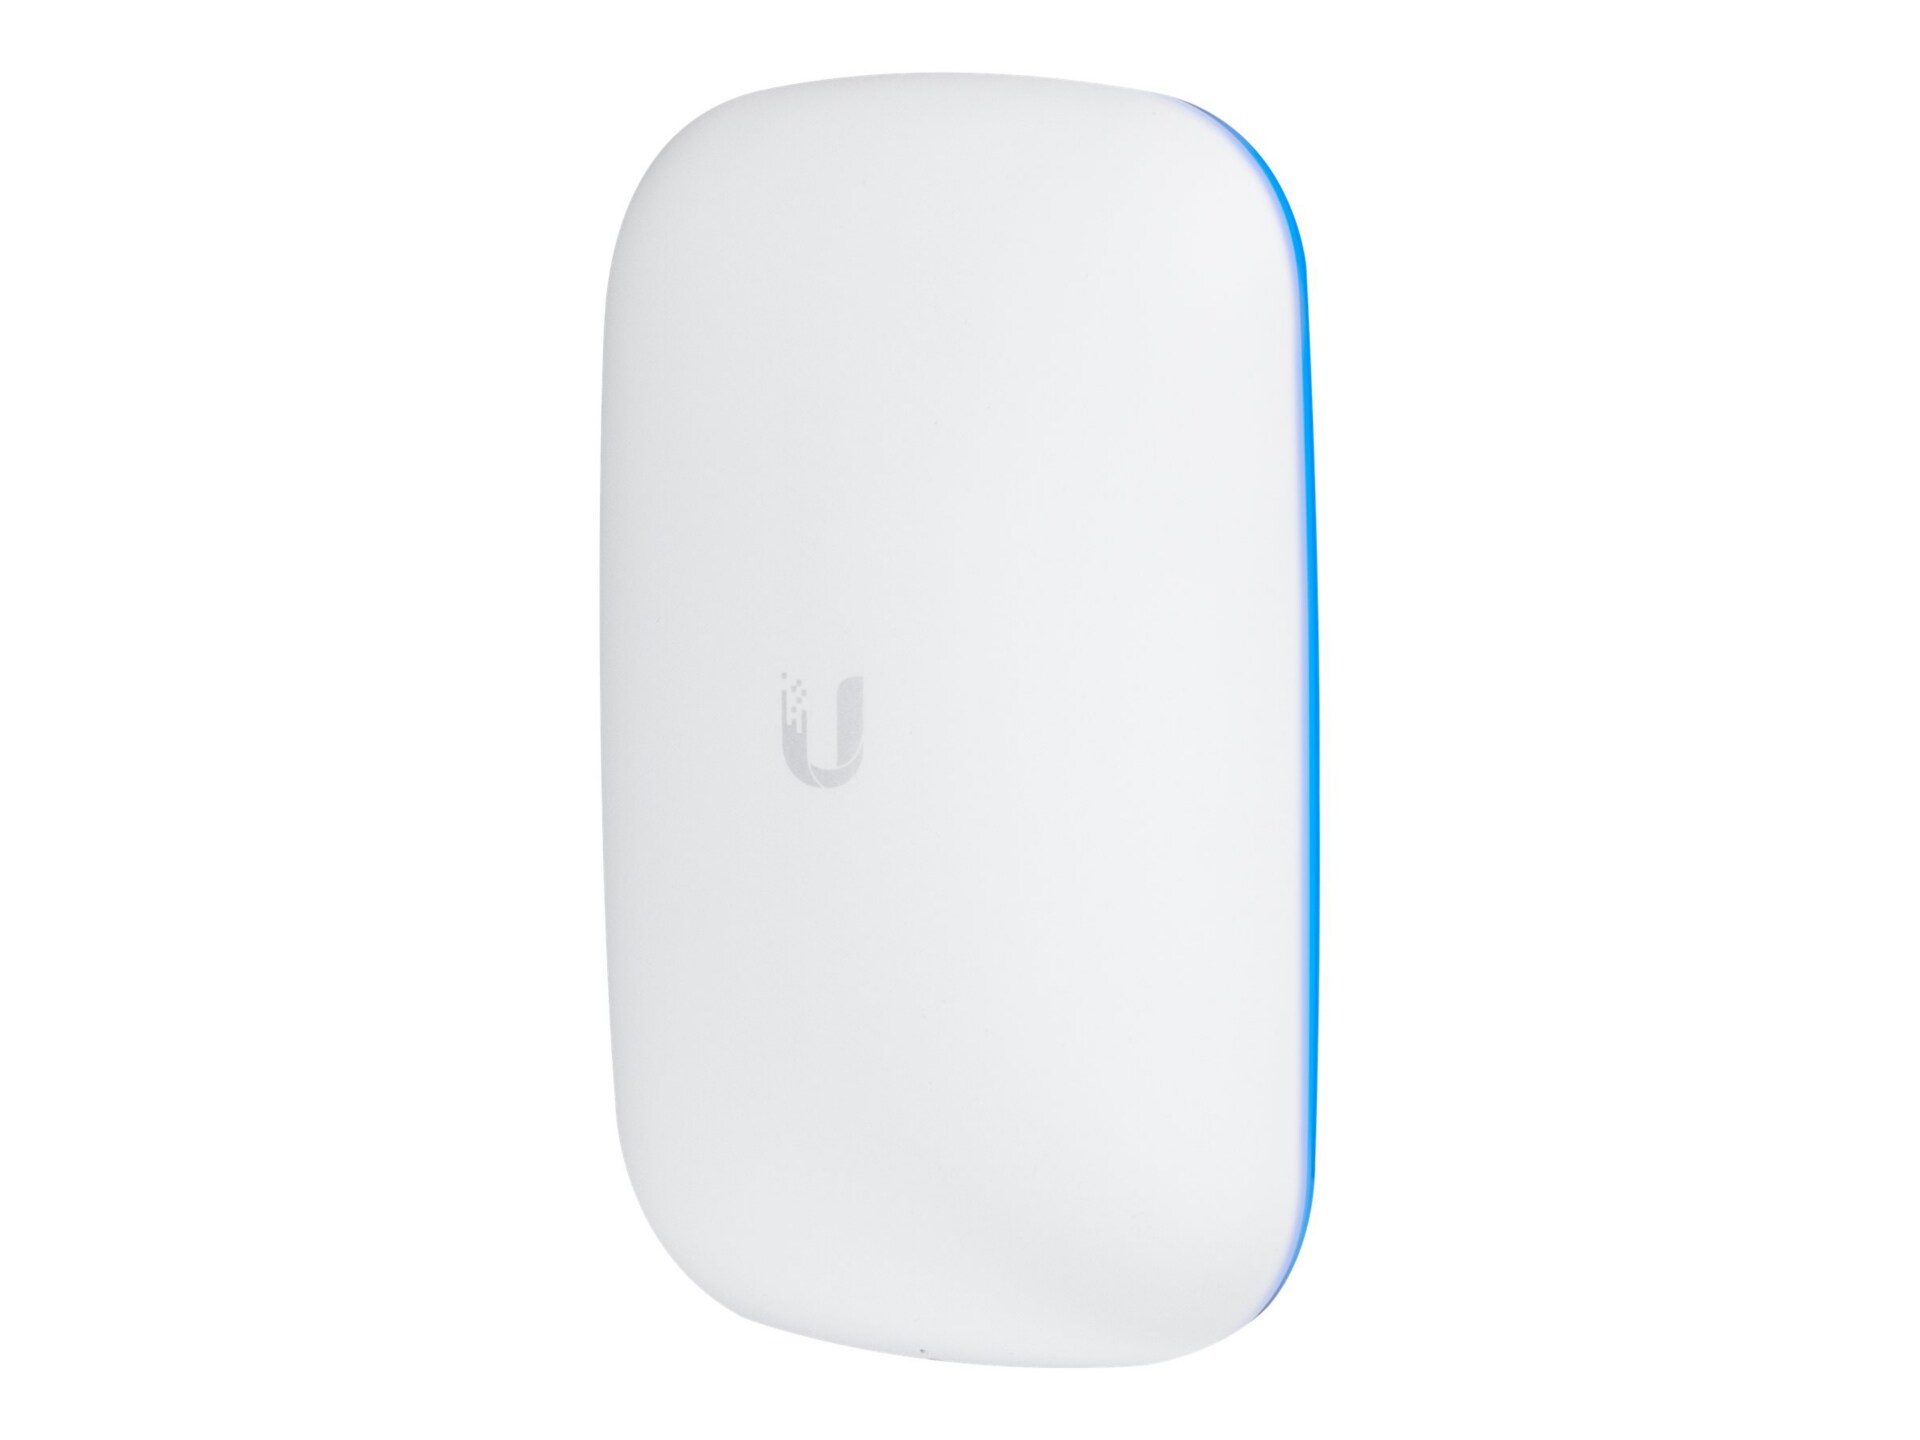 Ubiquiti UniFi AP BeaconHD - Wi-Fi range extender - Wi-Fi 5, Wi-Fi 5